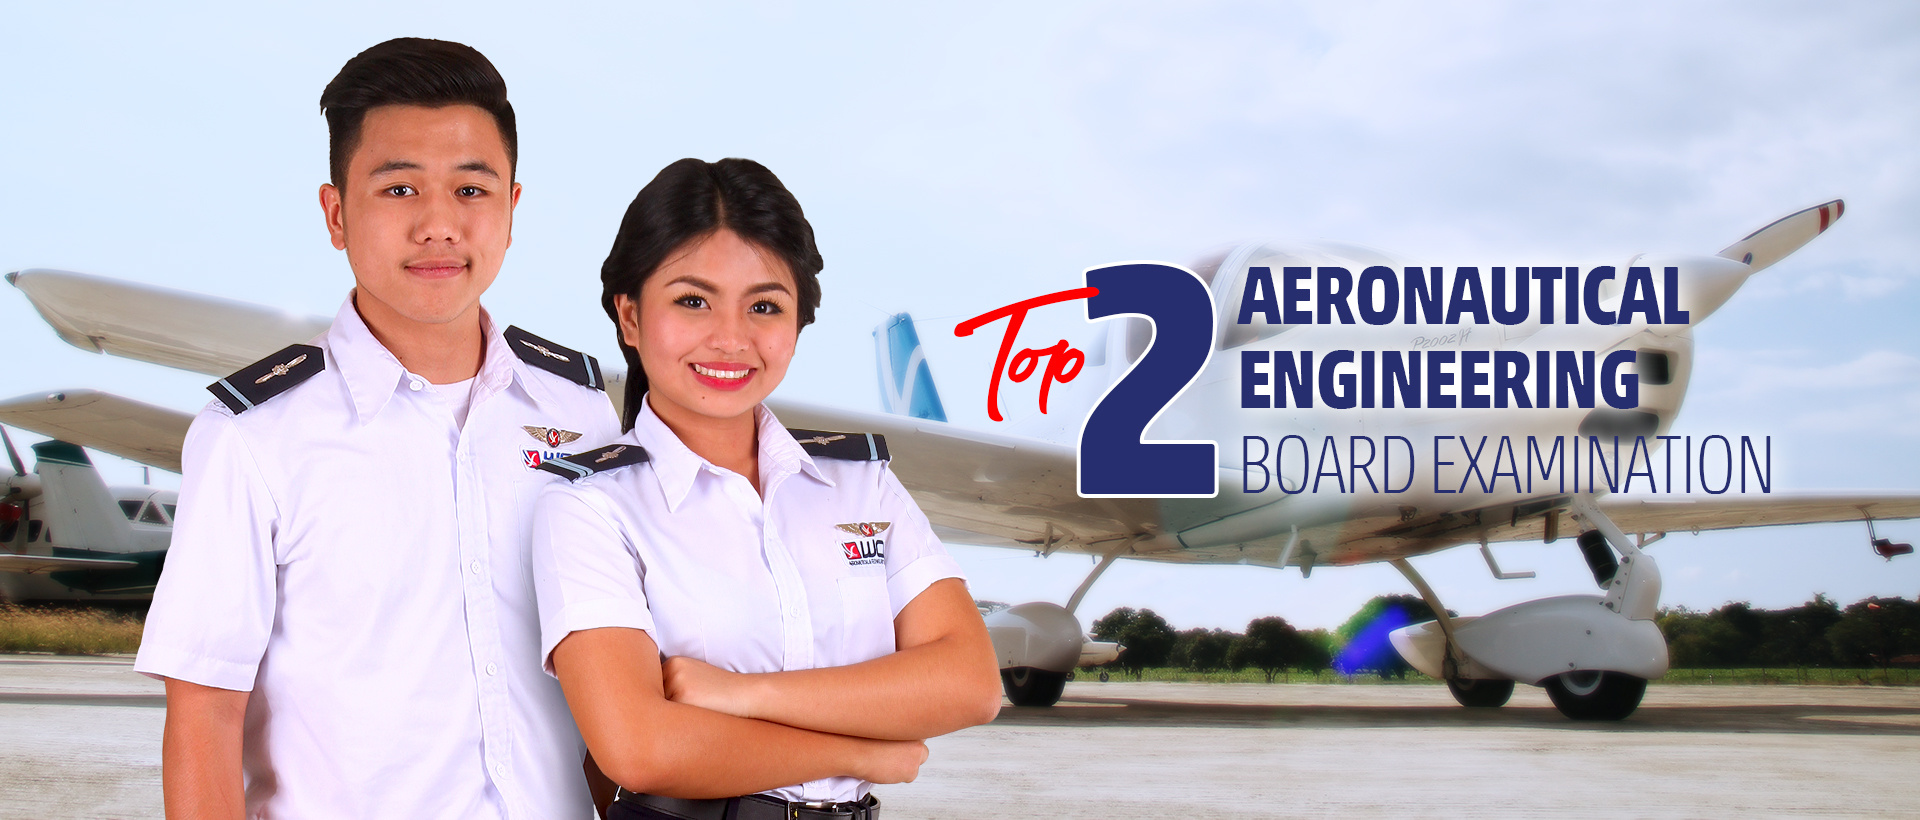 Top 2 Aeronautical Engineering